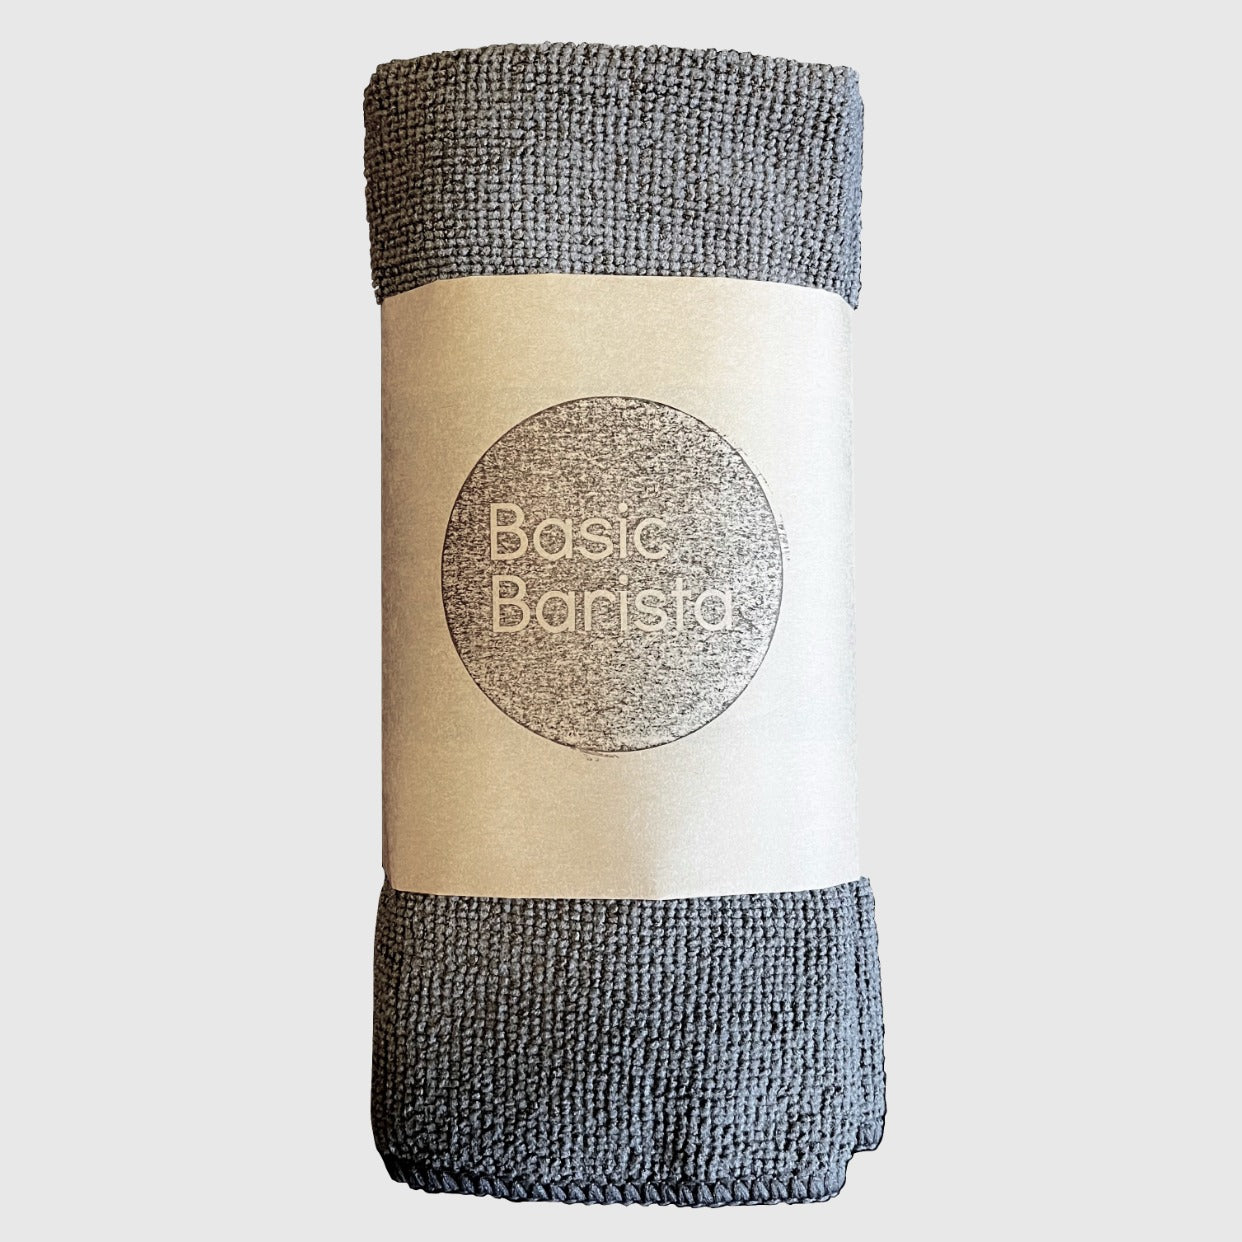 Microfiber cleaning barista cloths Basic Barista